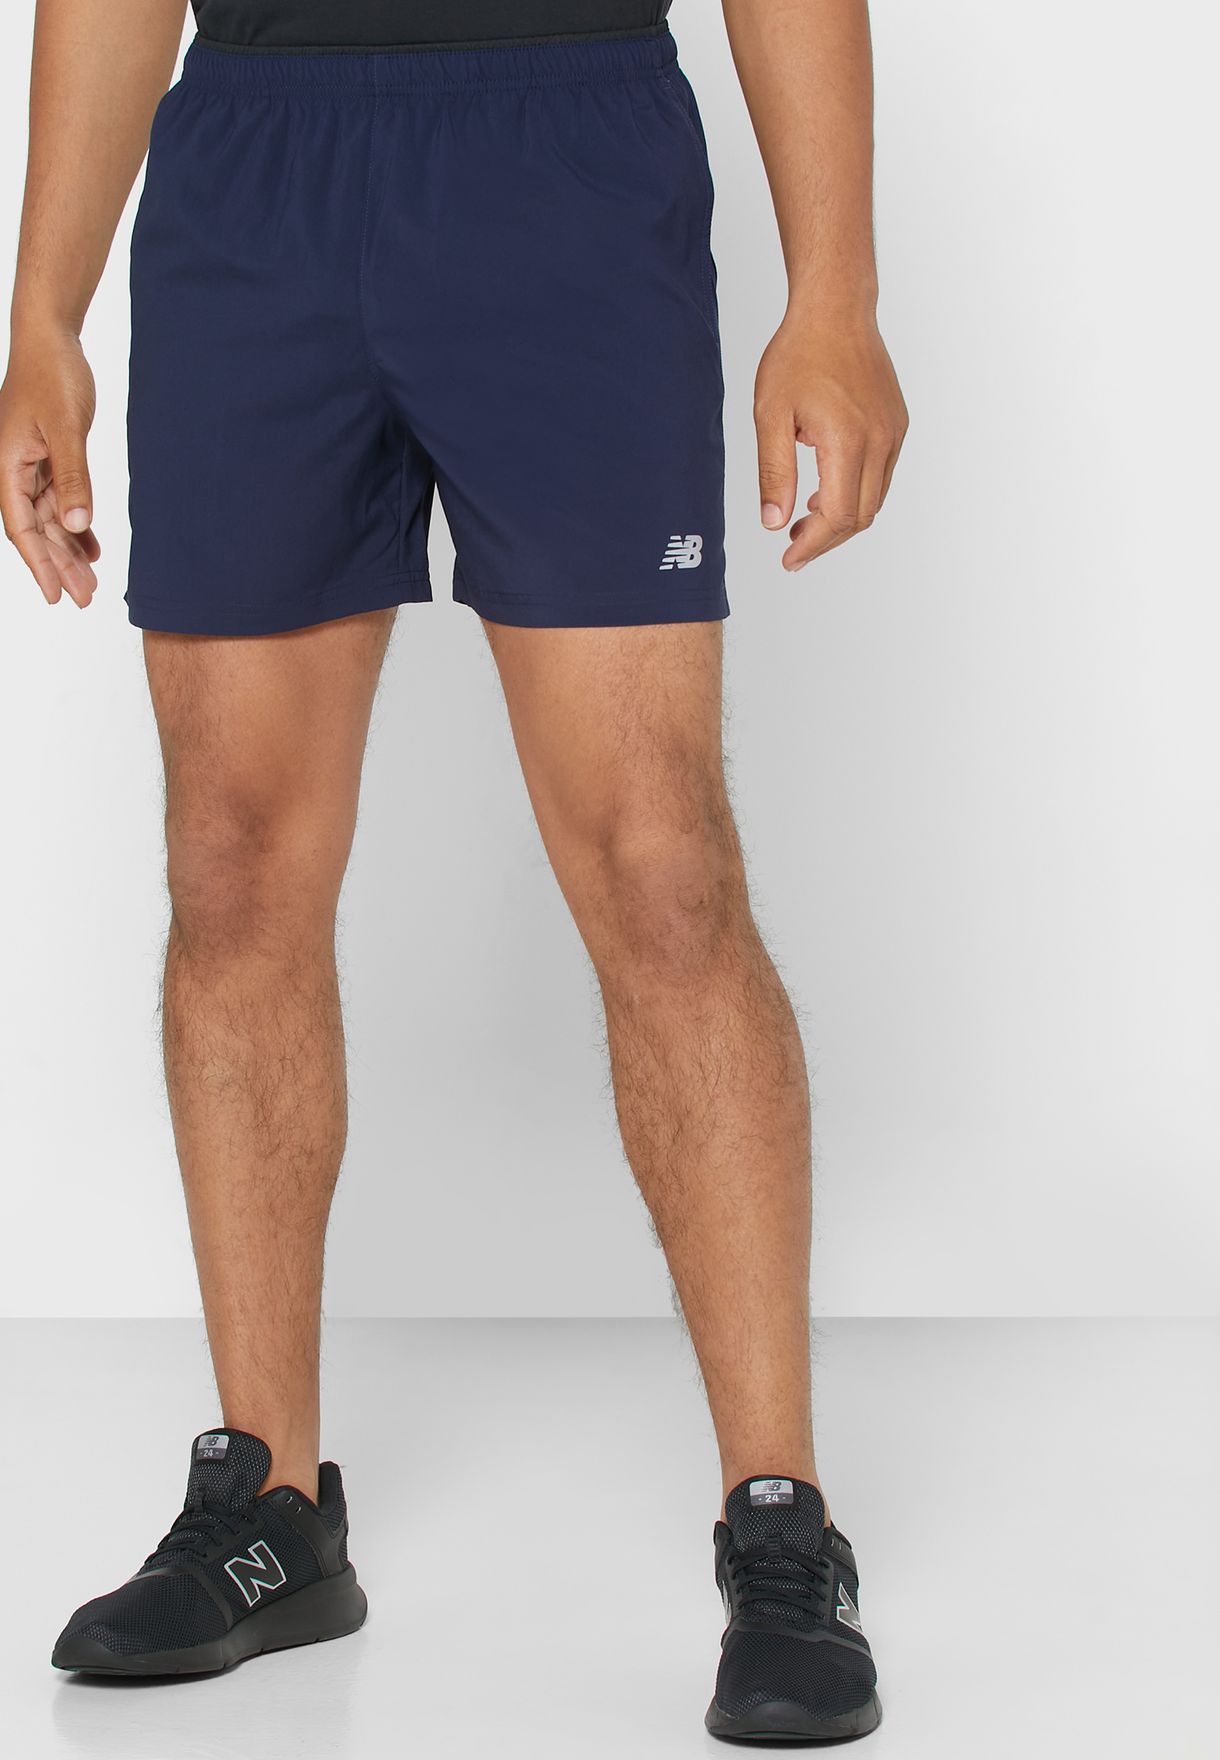 new balance navy shorts